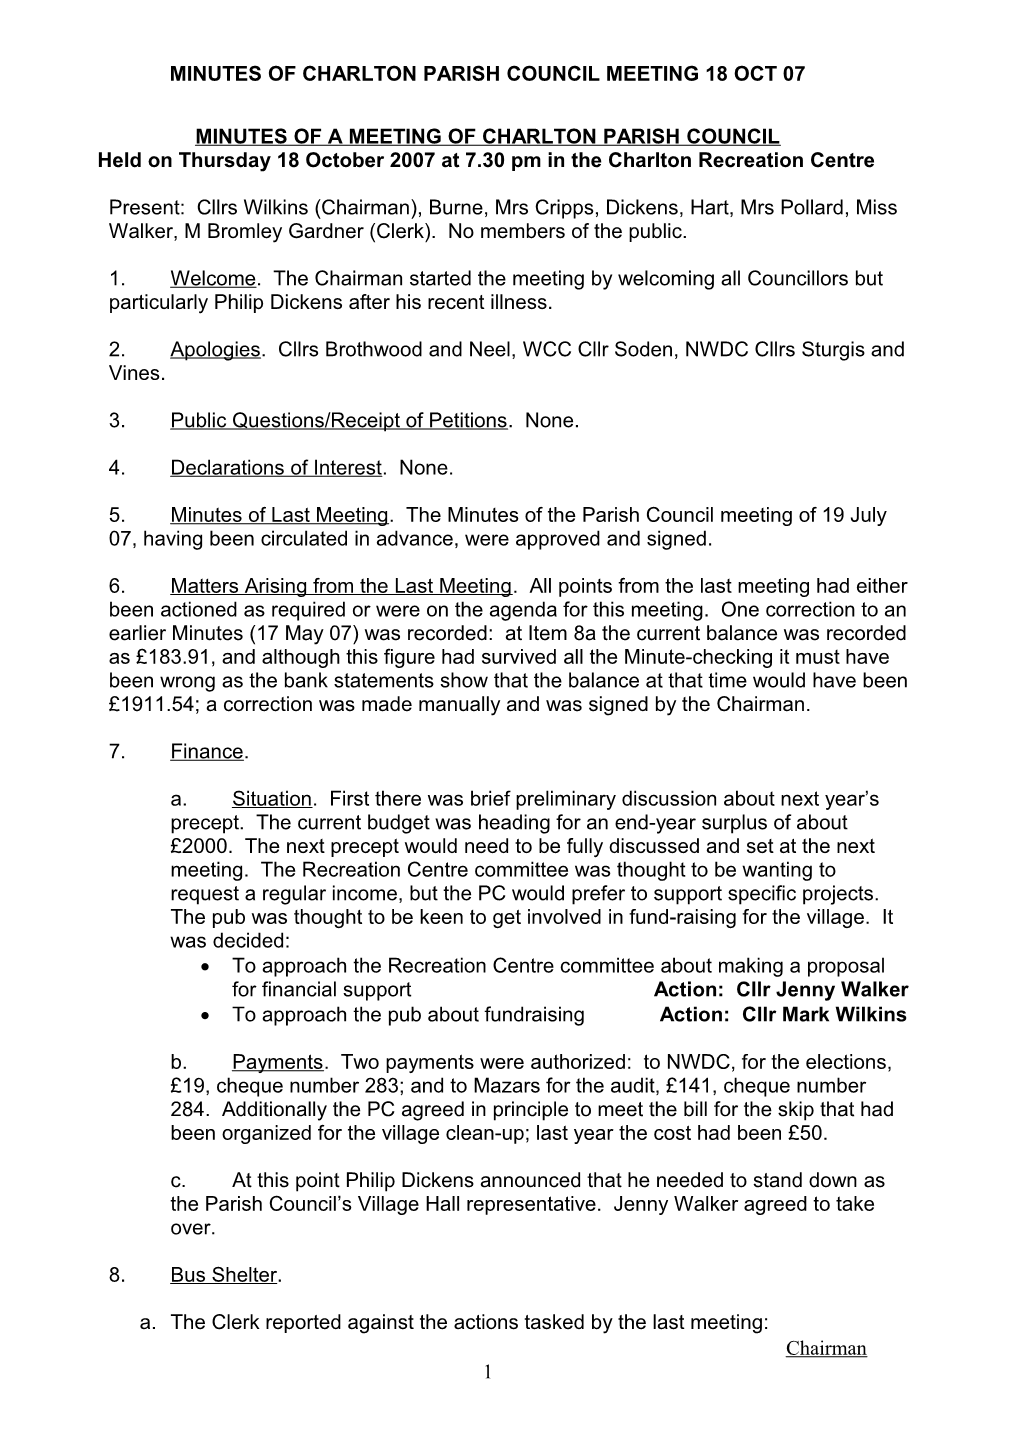 Minutes of a Meeting of Charlton Parish Council